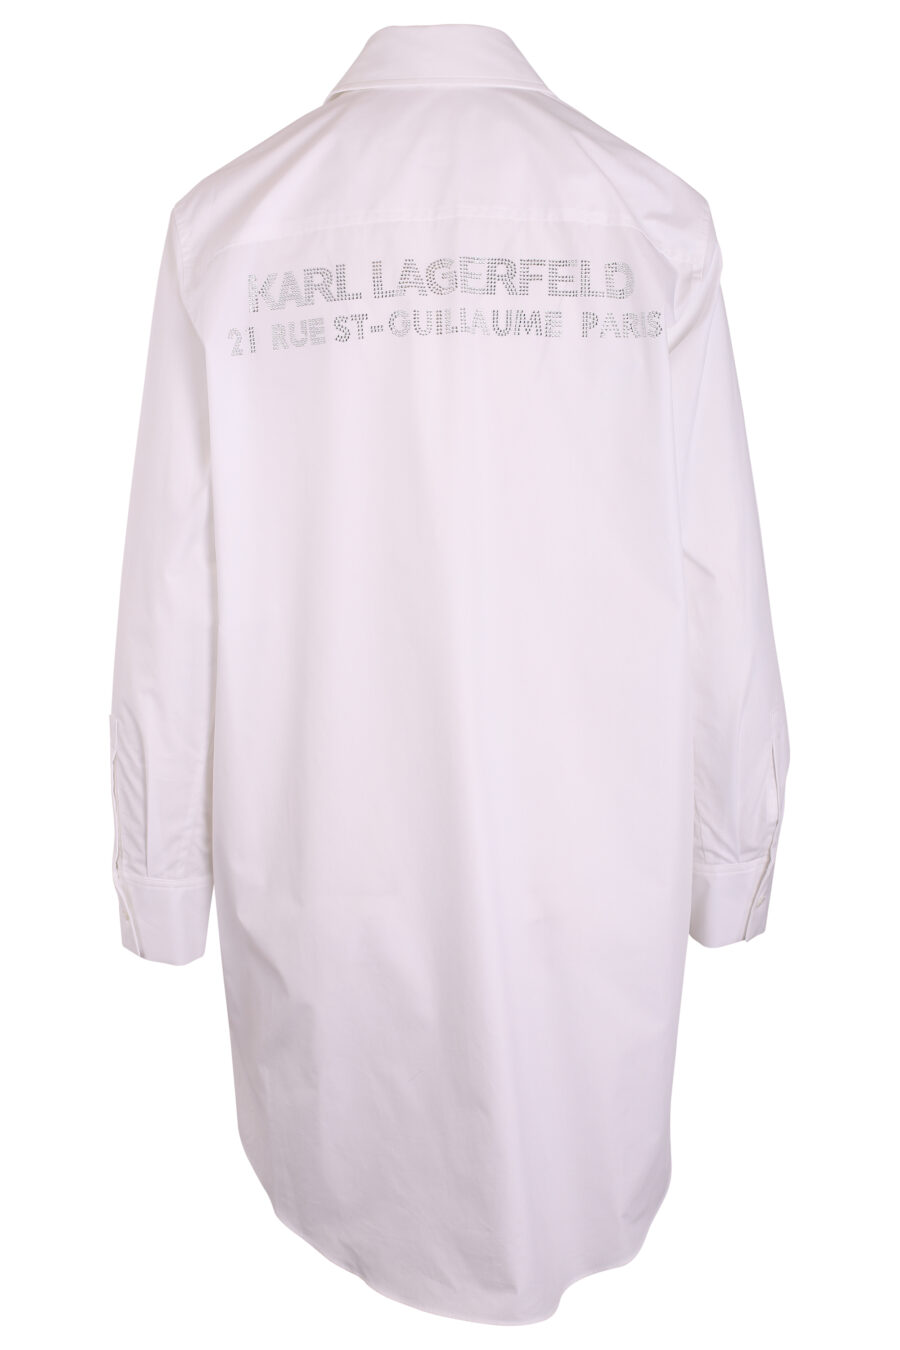 Camisa branca comprida com logótipo de strass - IMG 3424